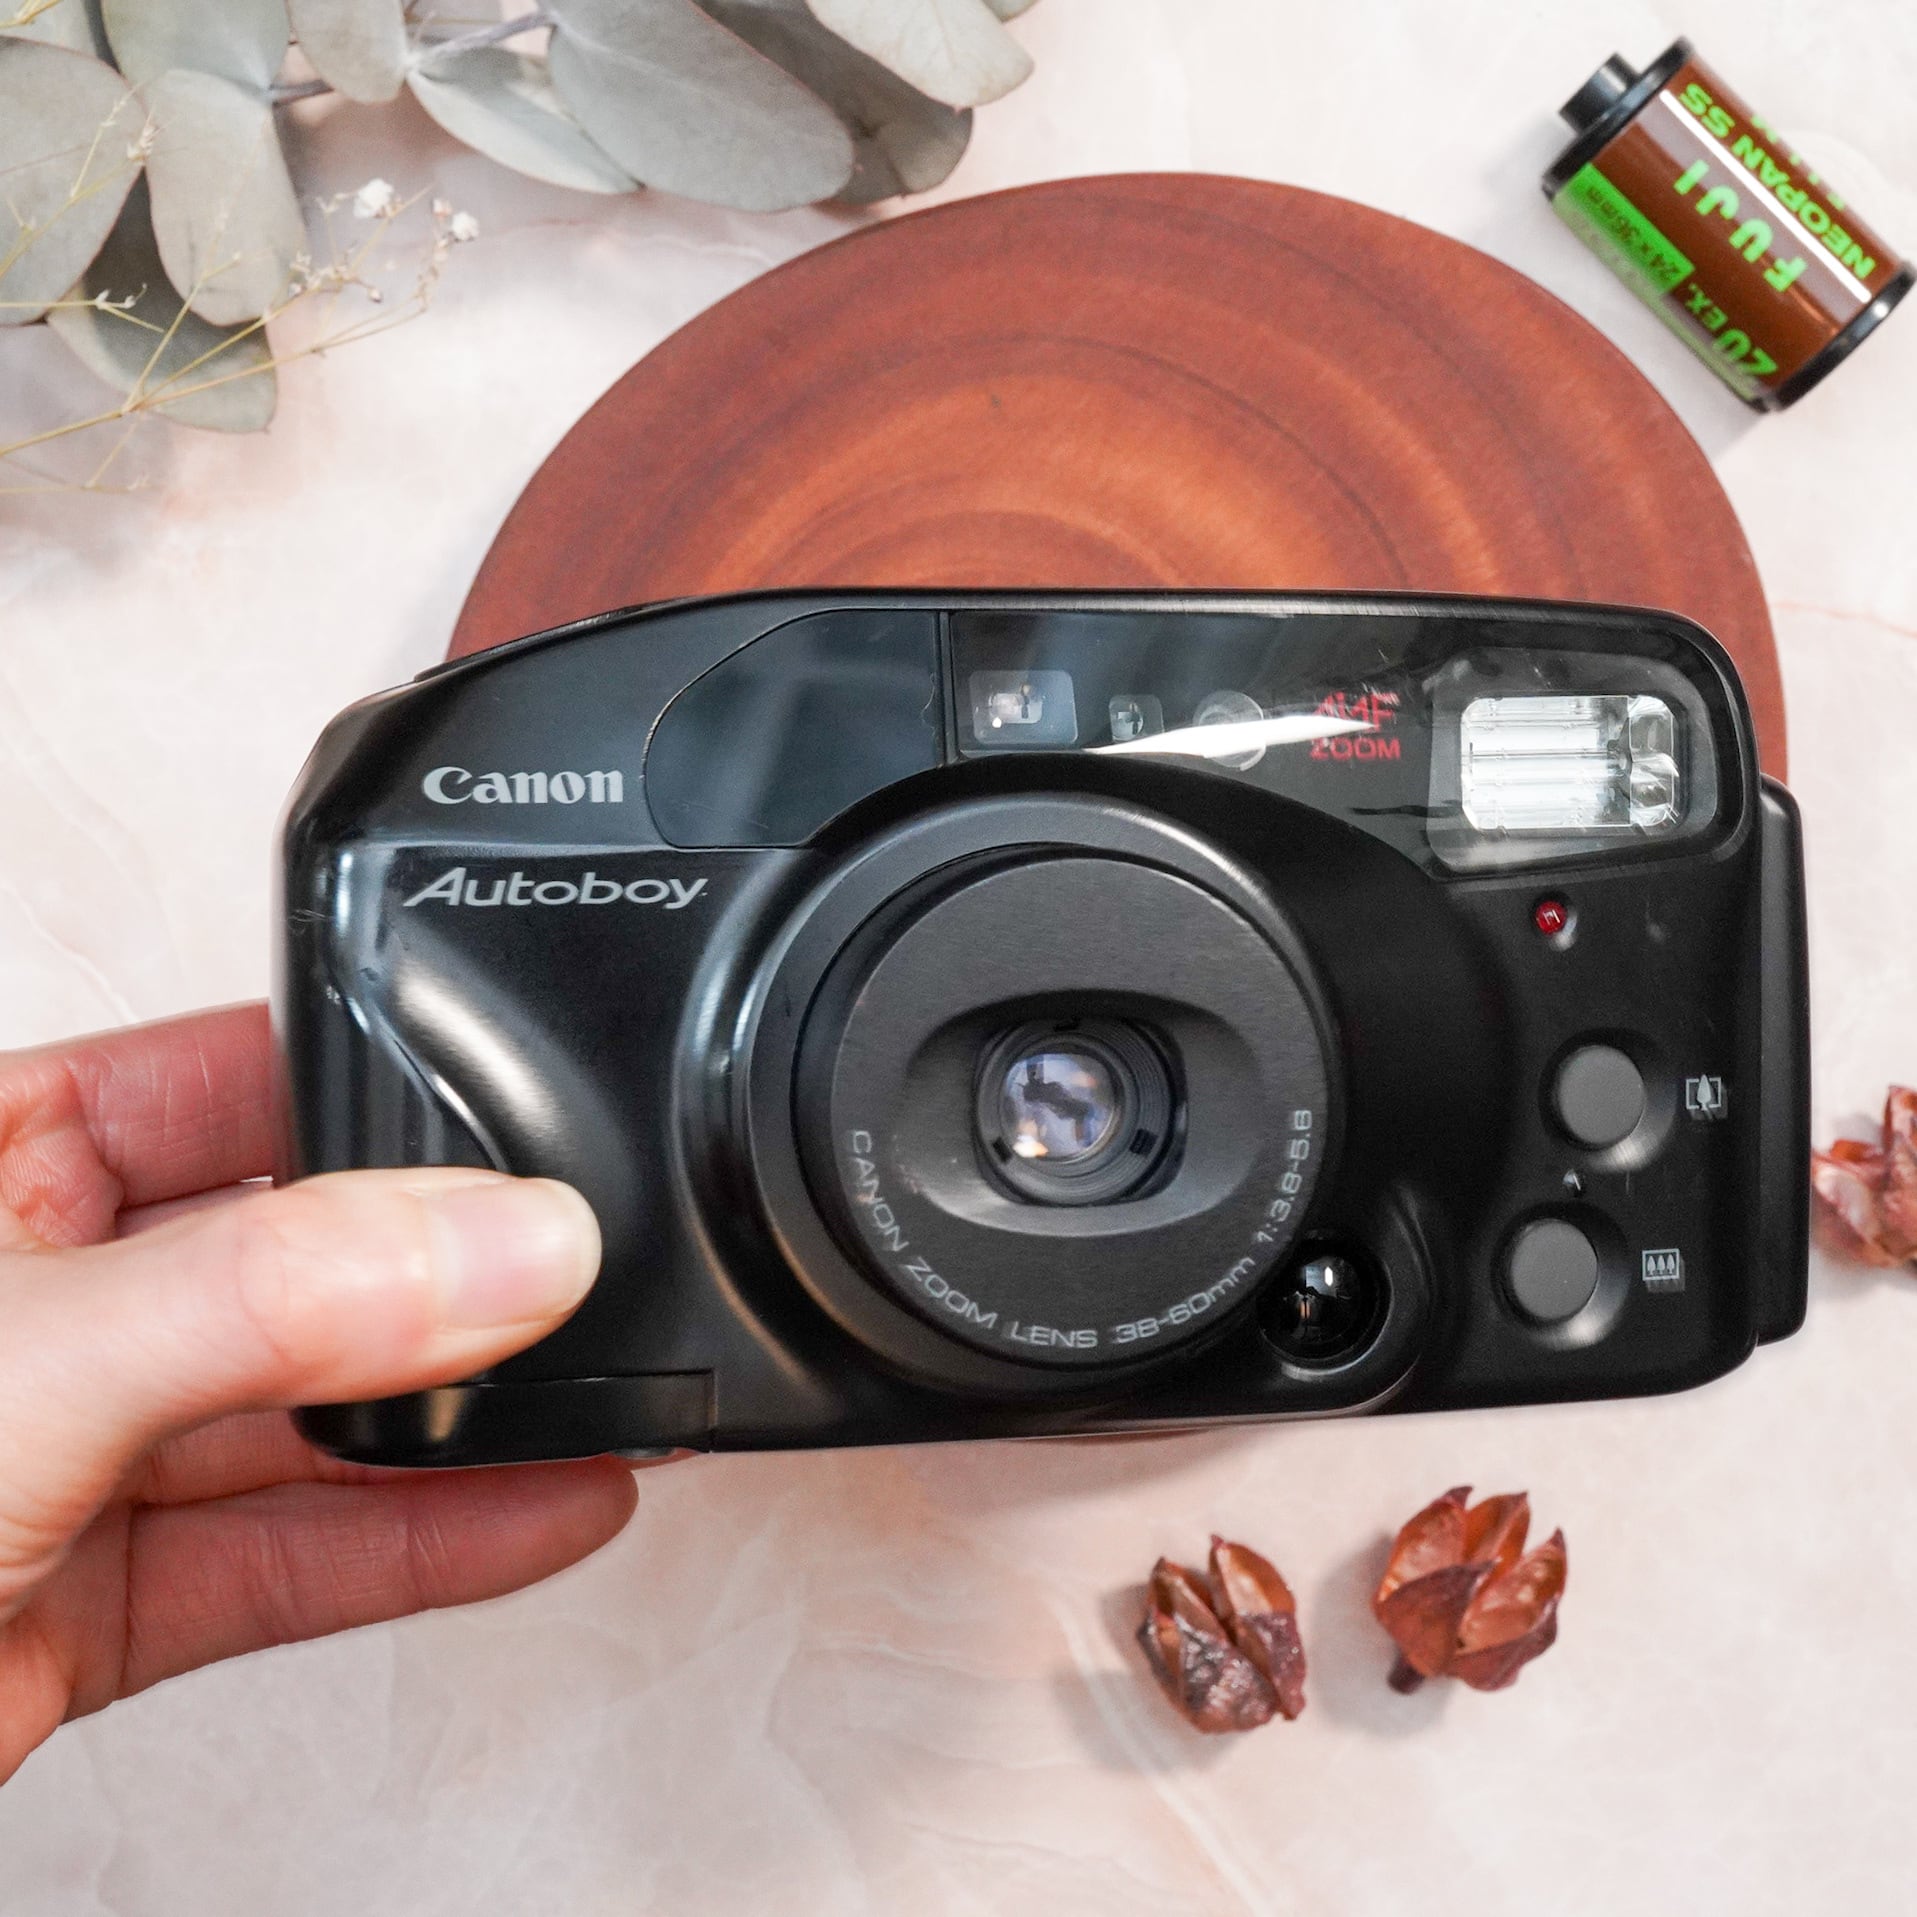 Canon】 New AutoBoy 人気のキャプション機能付き | Macha Cameras